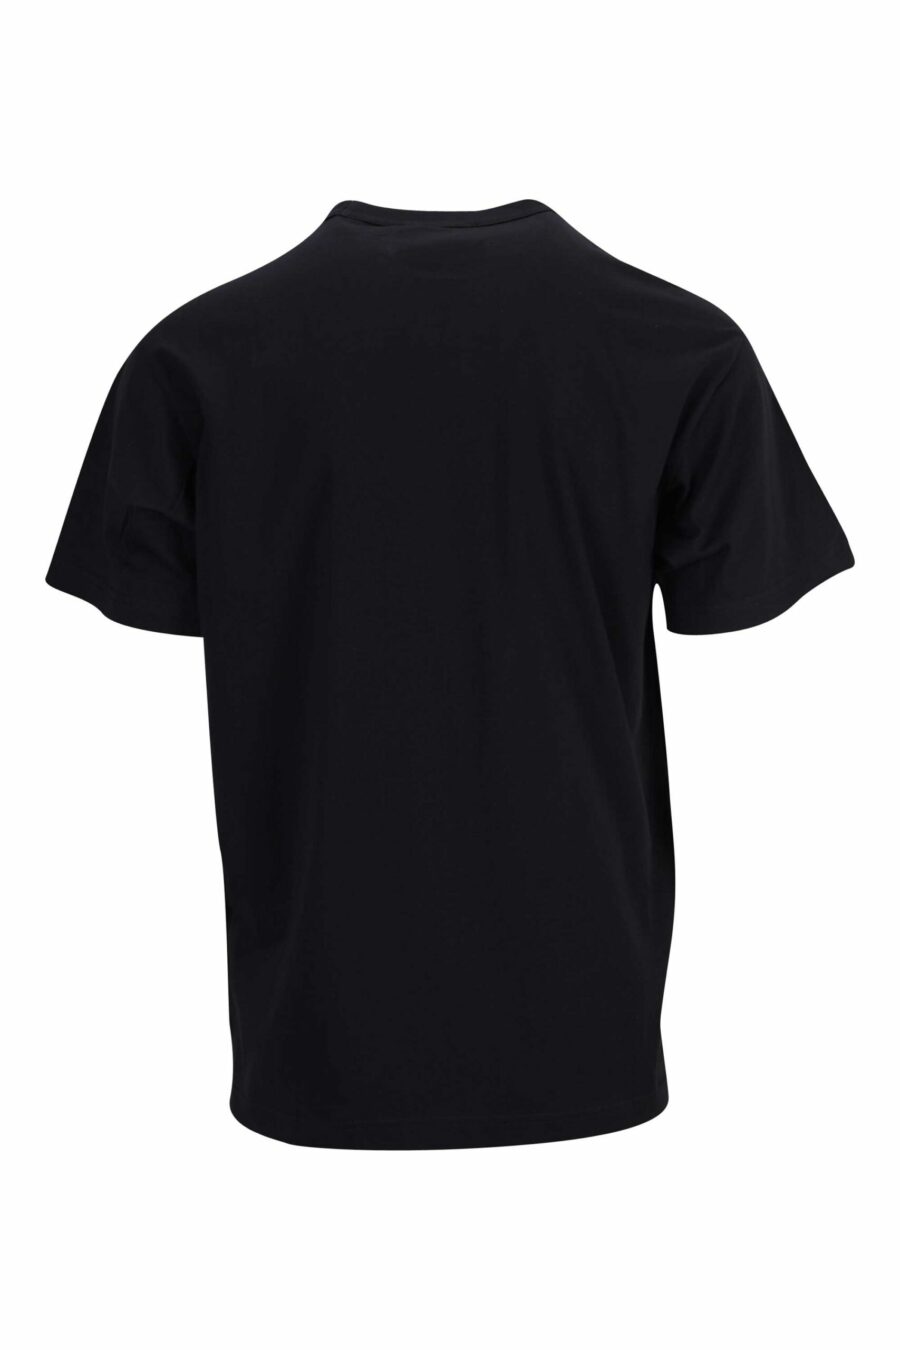 Schwarzes T-Shirt mit kontrastierendem kreisförmigem Mini-Logo - 8052019471700 1 skaliert